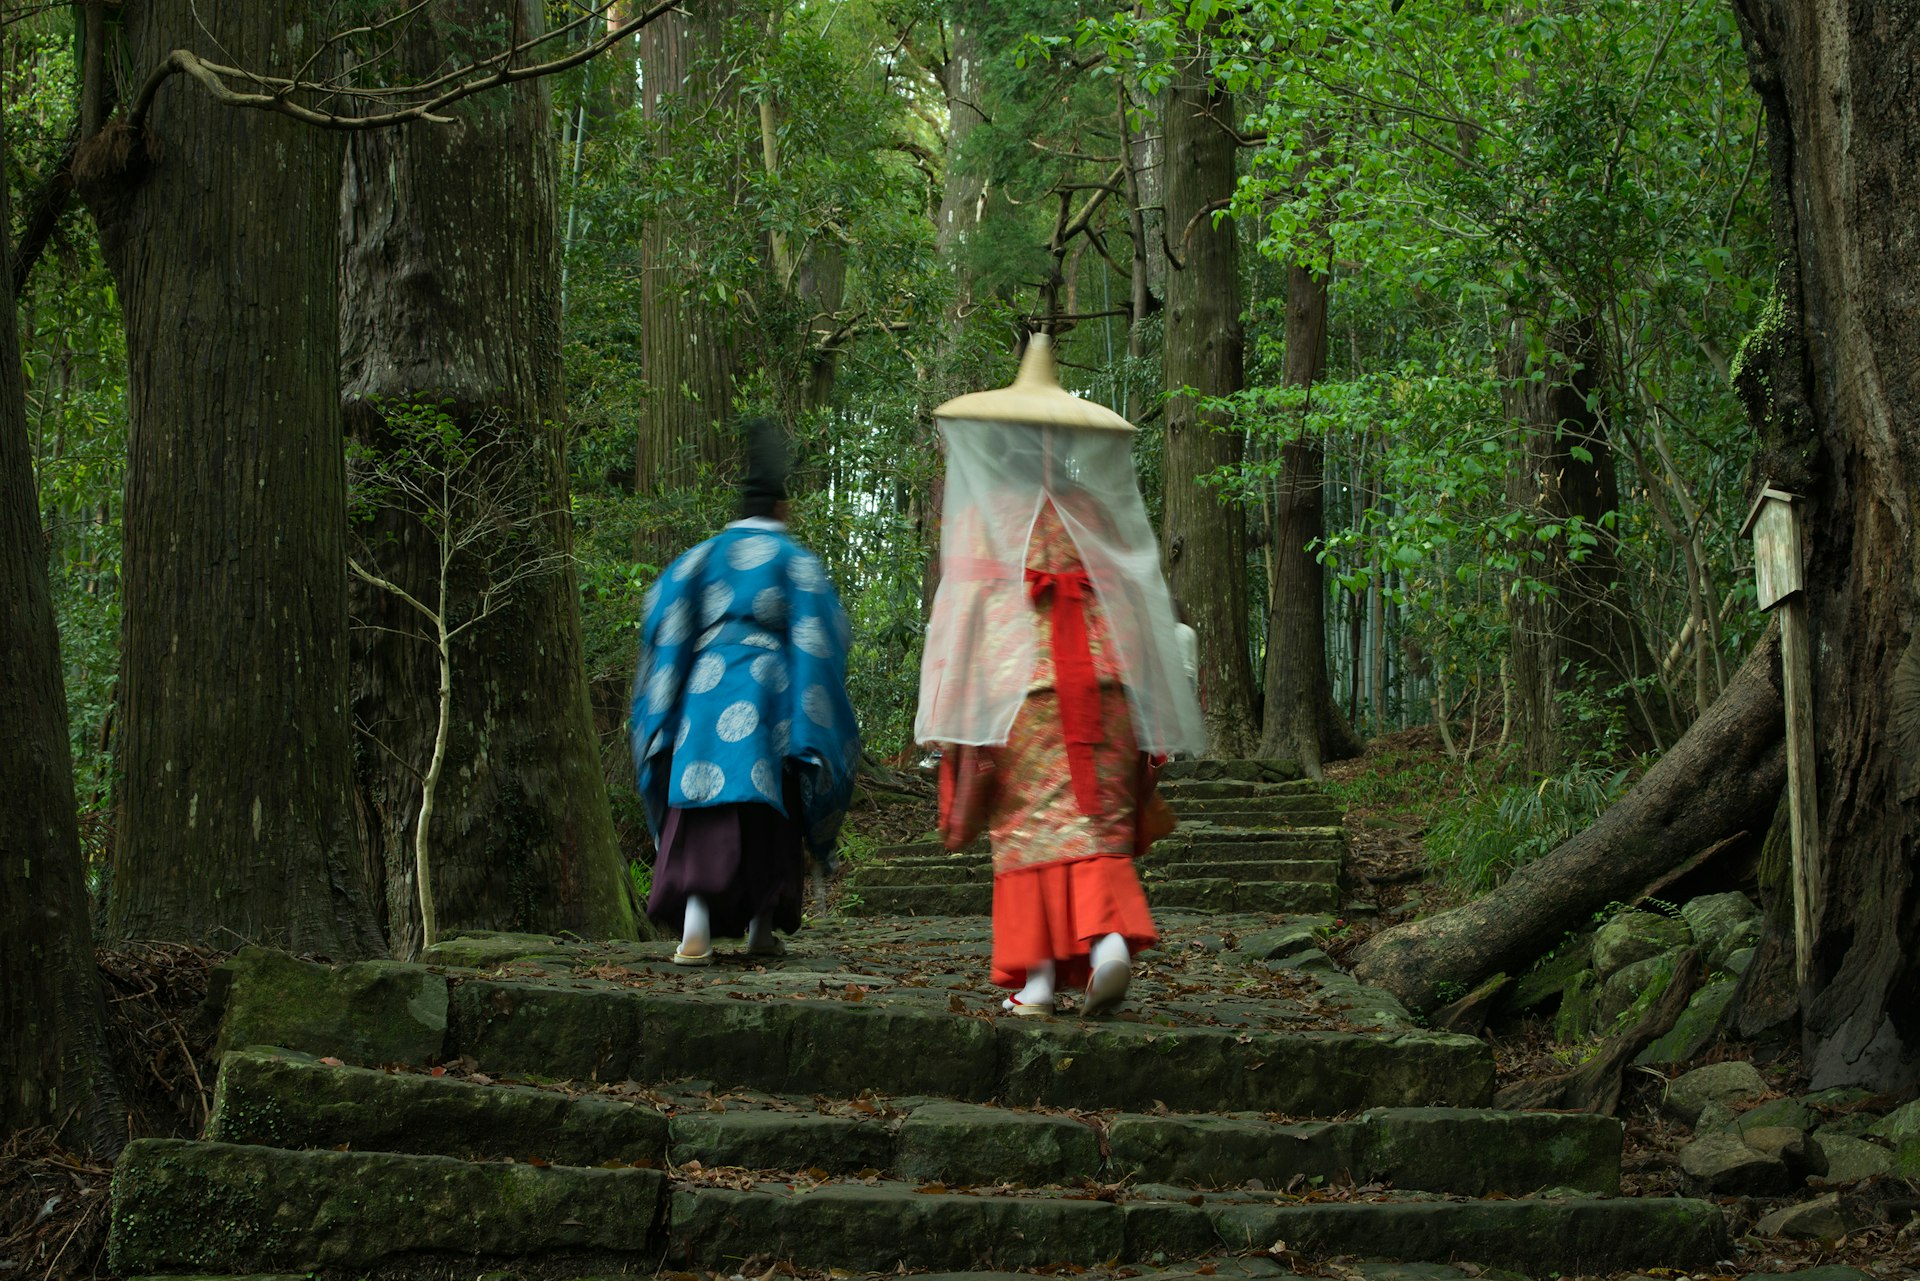 Features - Japanese pilgrims in Kumano Kodo pilgrimage, Japan